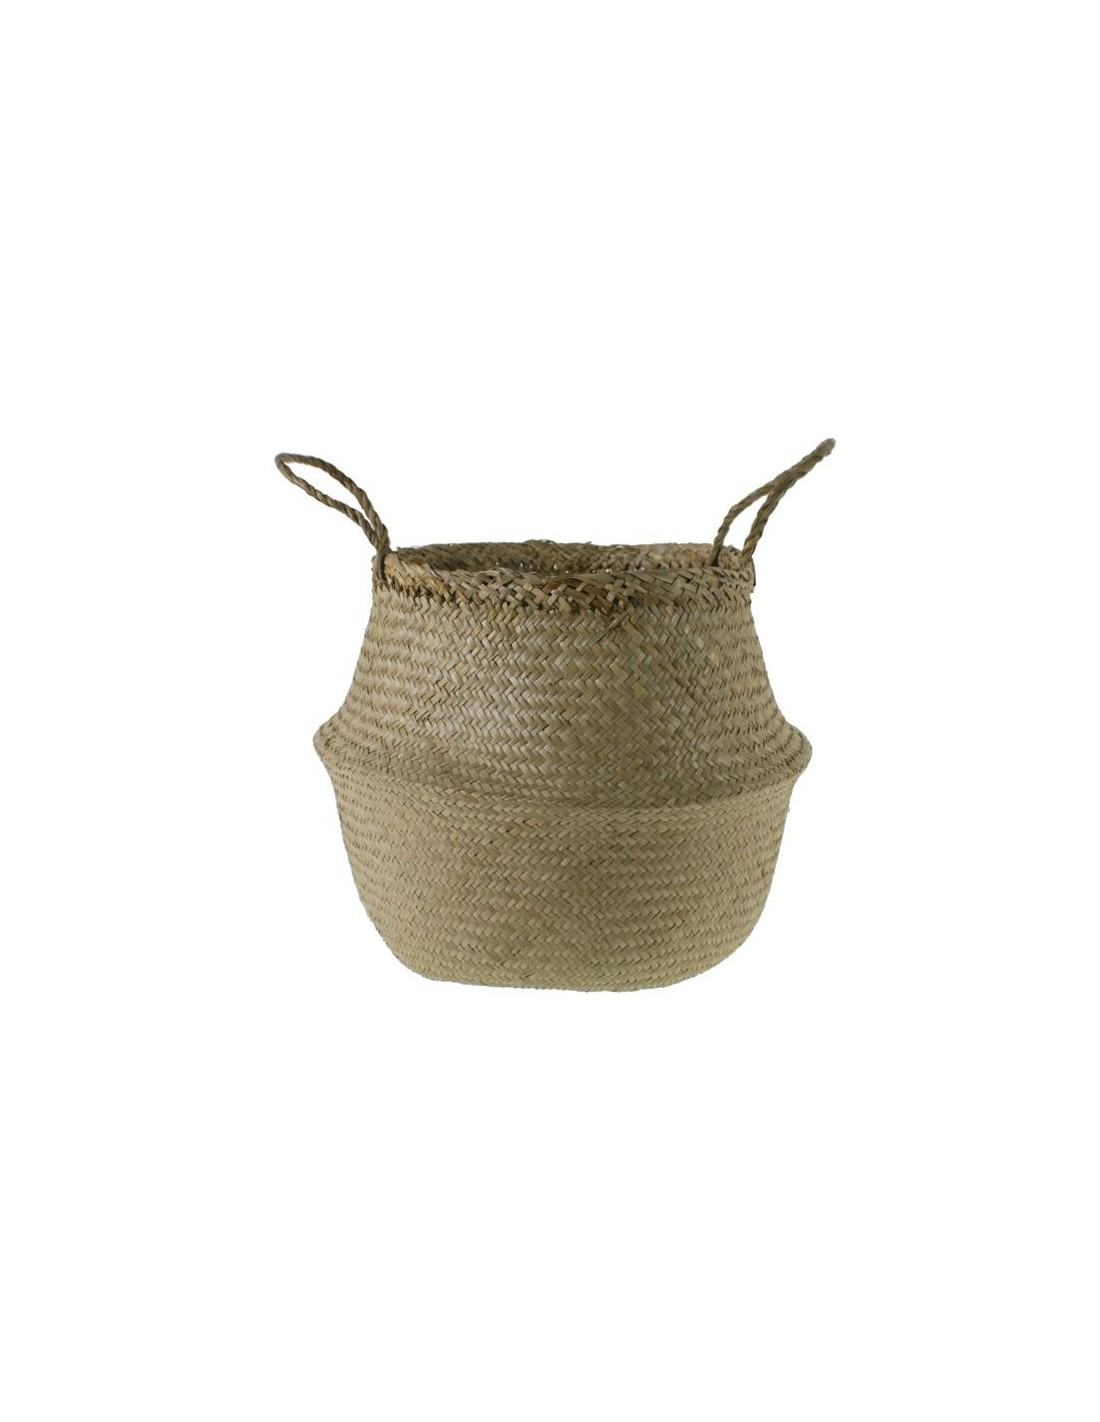 Cesta de hoja de palma para cubremacetas cesta almacenamiento cesta para plantas decoración hogar